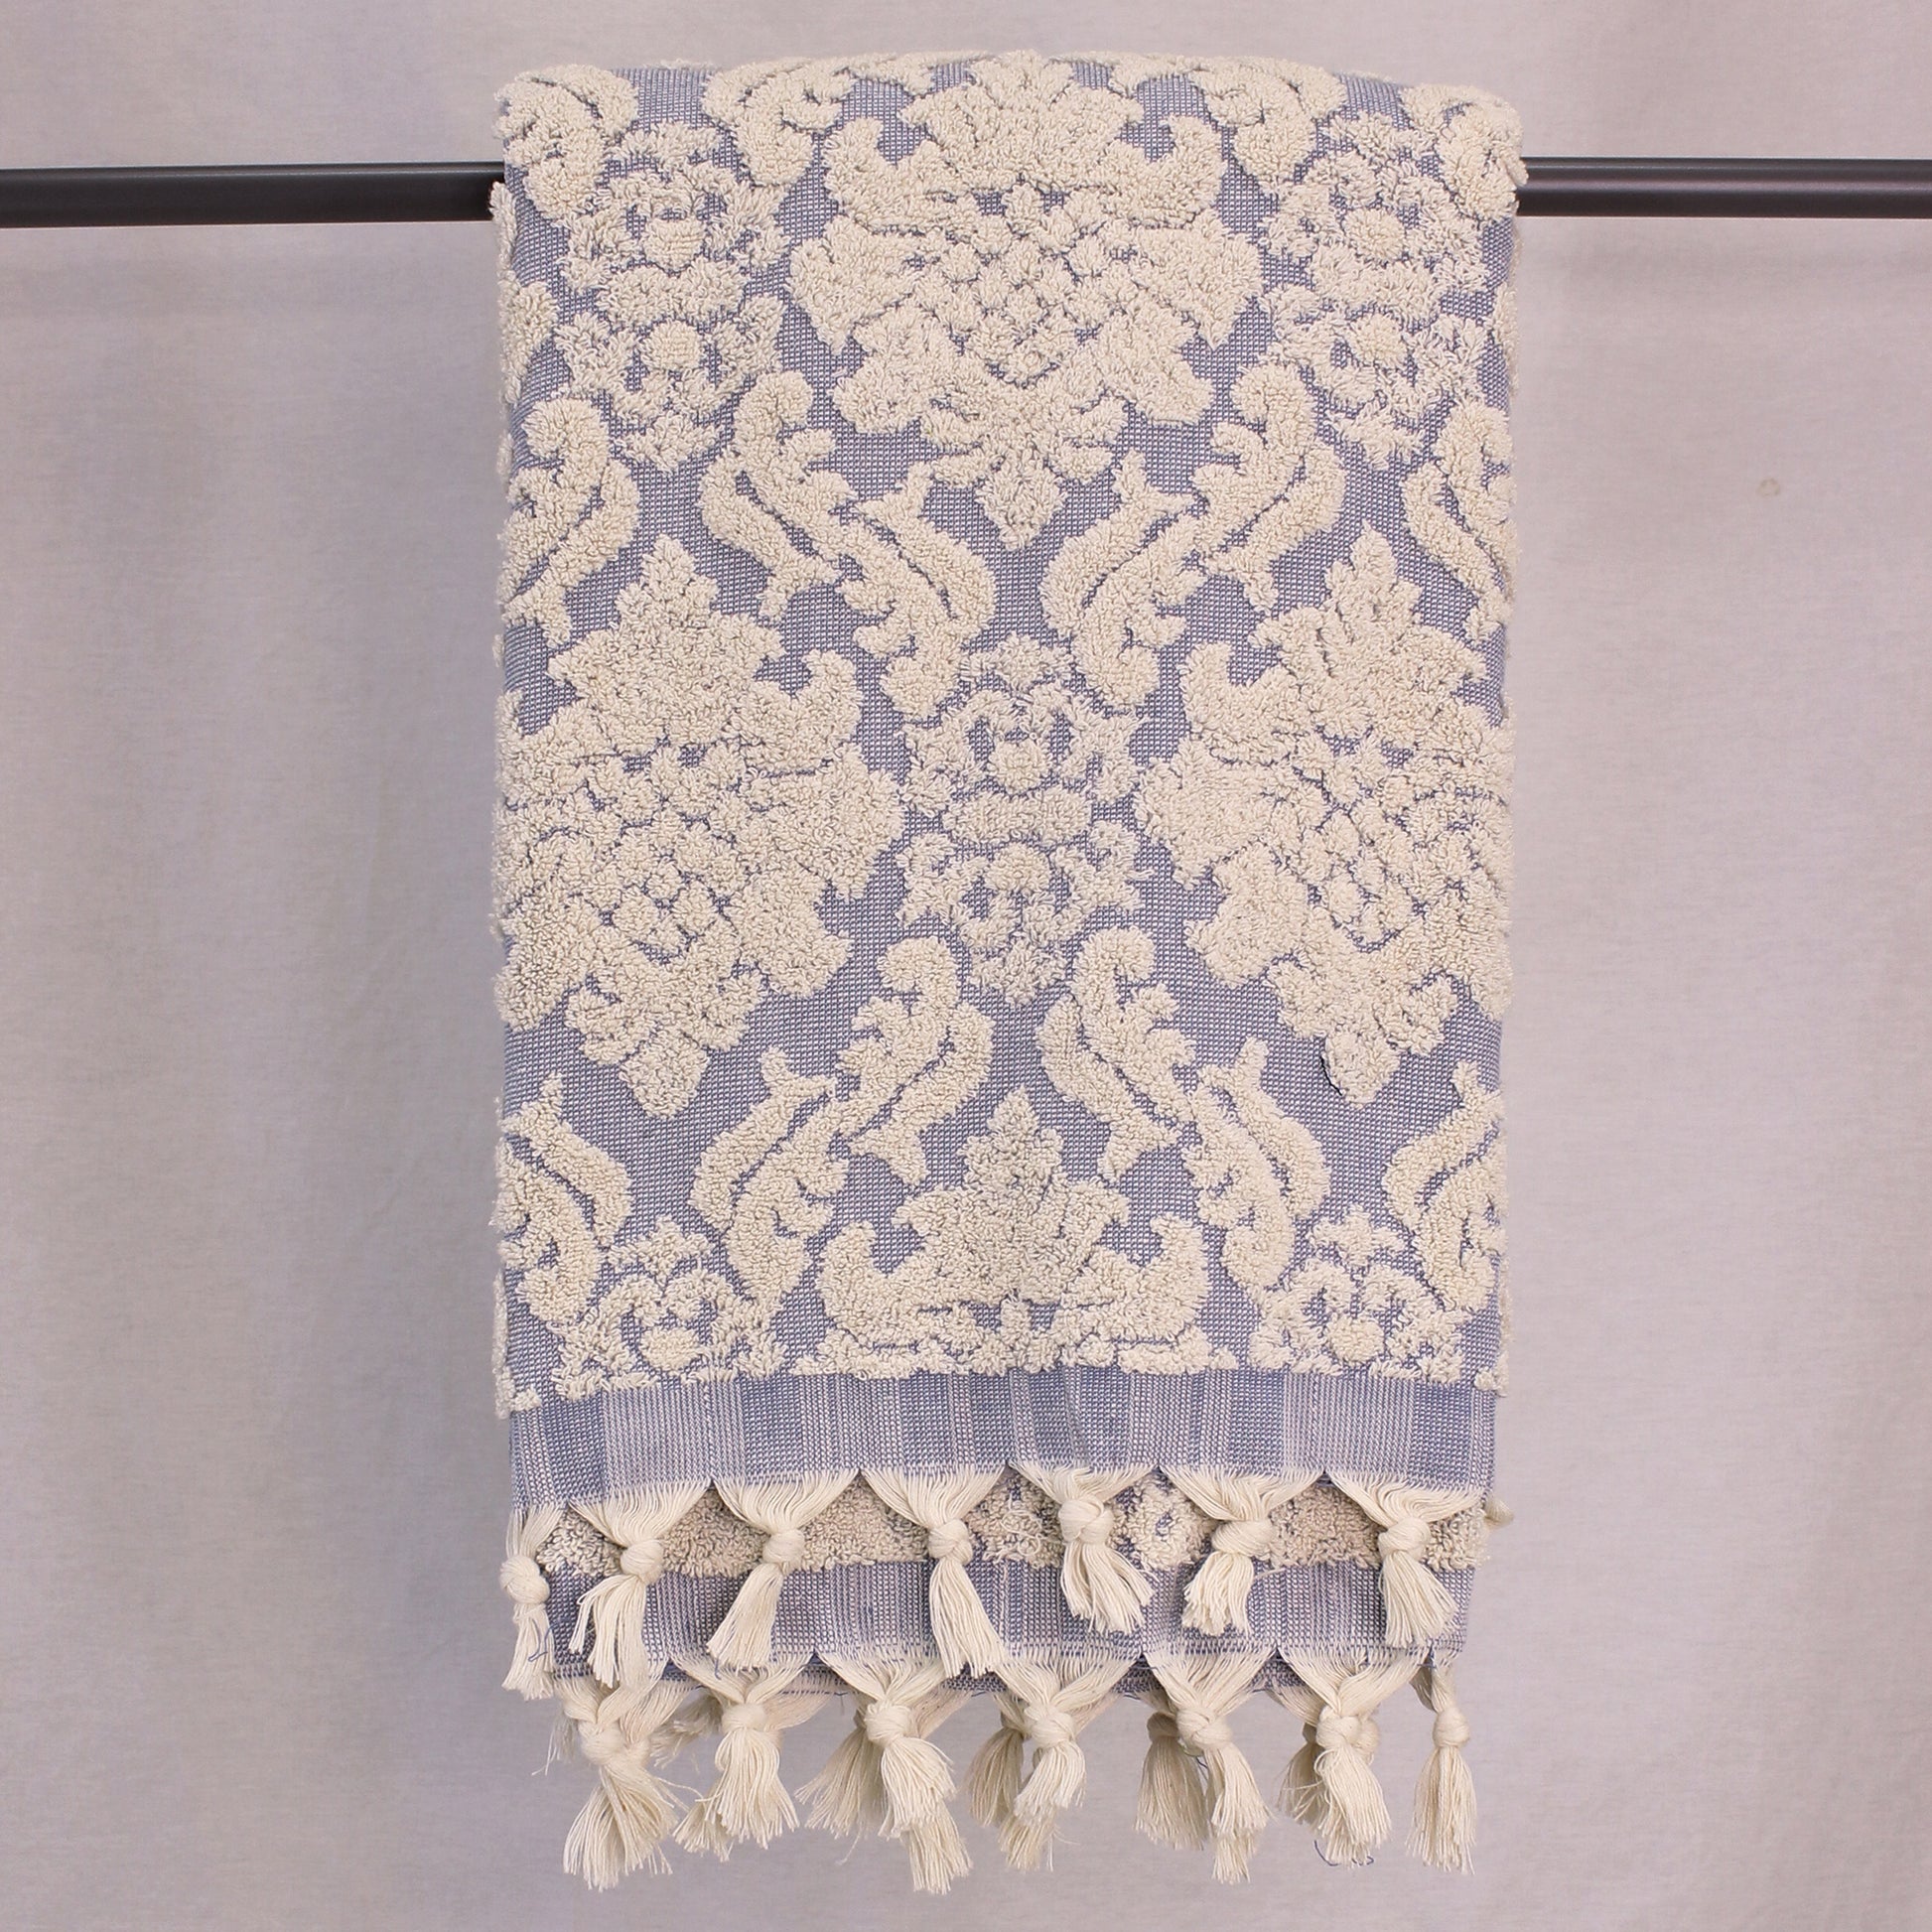 Natural Cotton Hand Woven Turkish Bath Towels